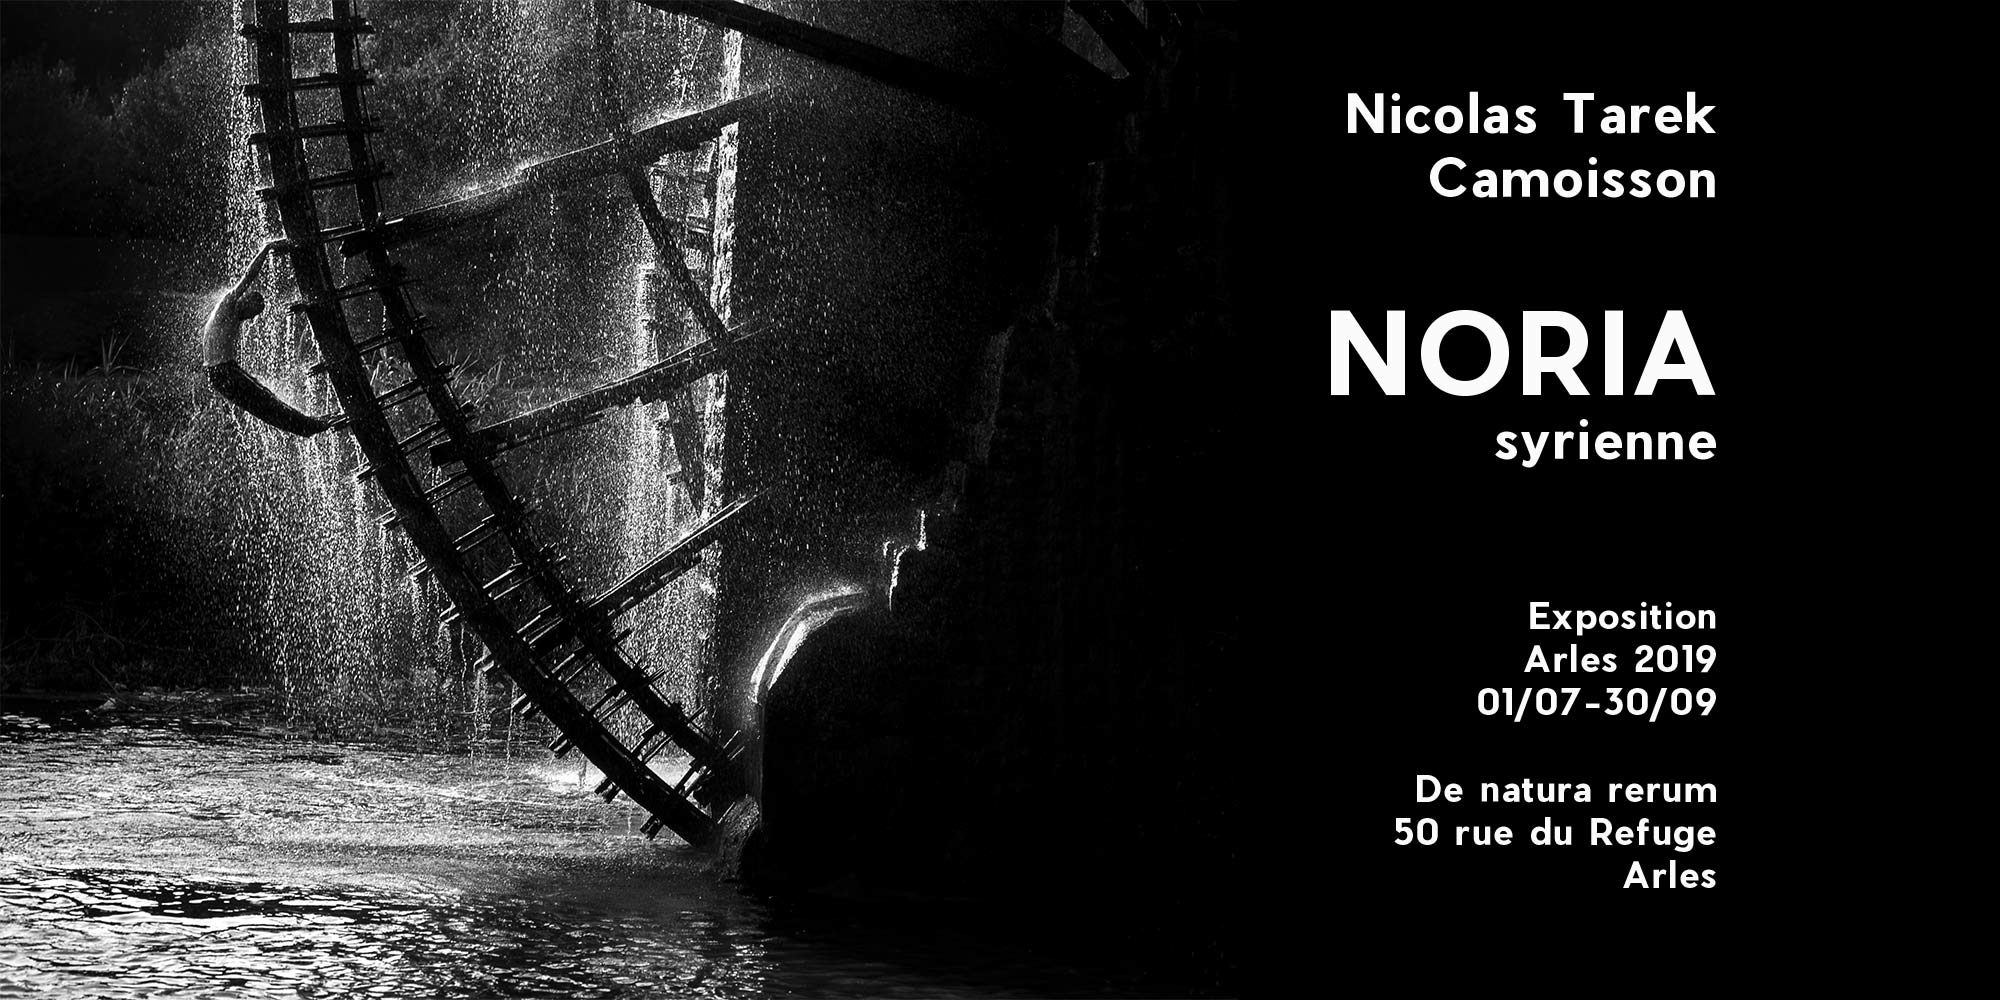 NORIA syrienne, exposition de photographies de Nicolas T. Camoisson, De natura rerum, Arles, été 2019